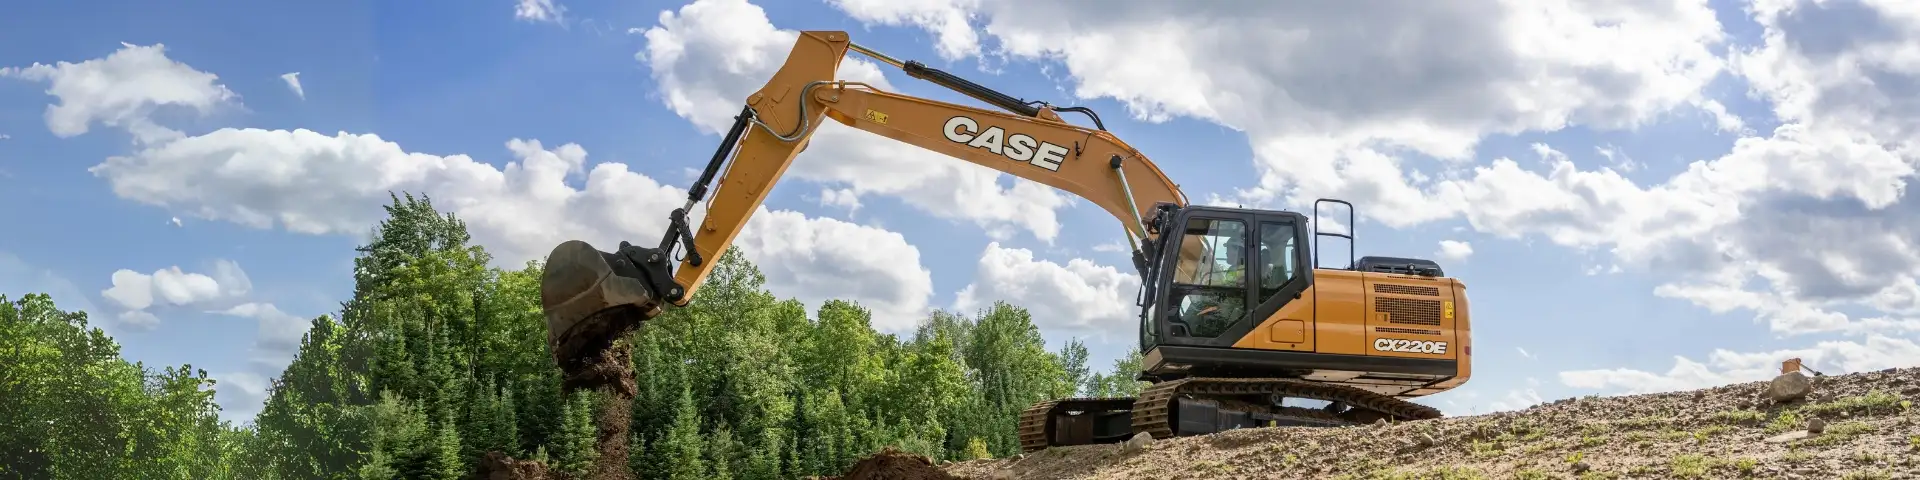 CASE CX220E Large Excavator